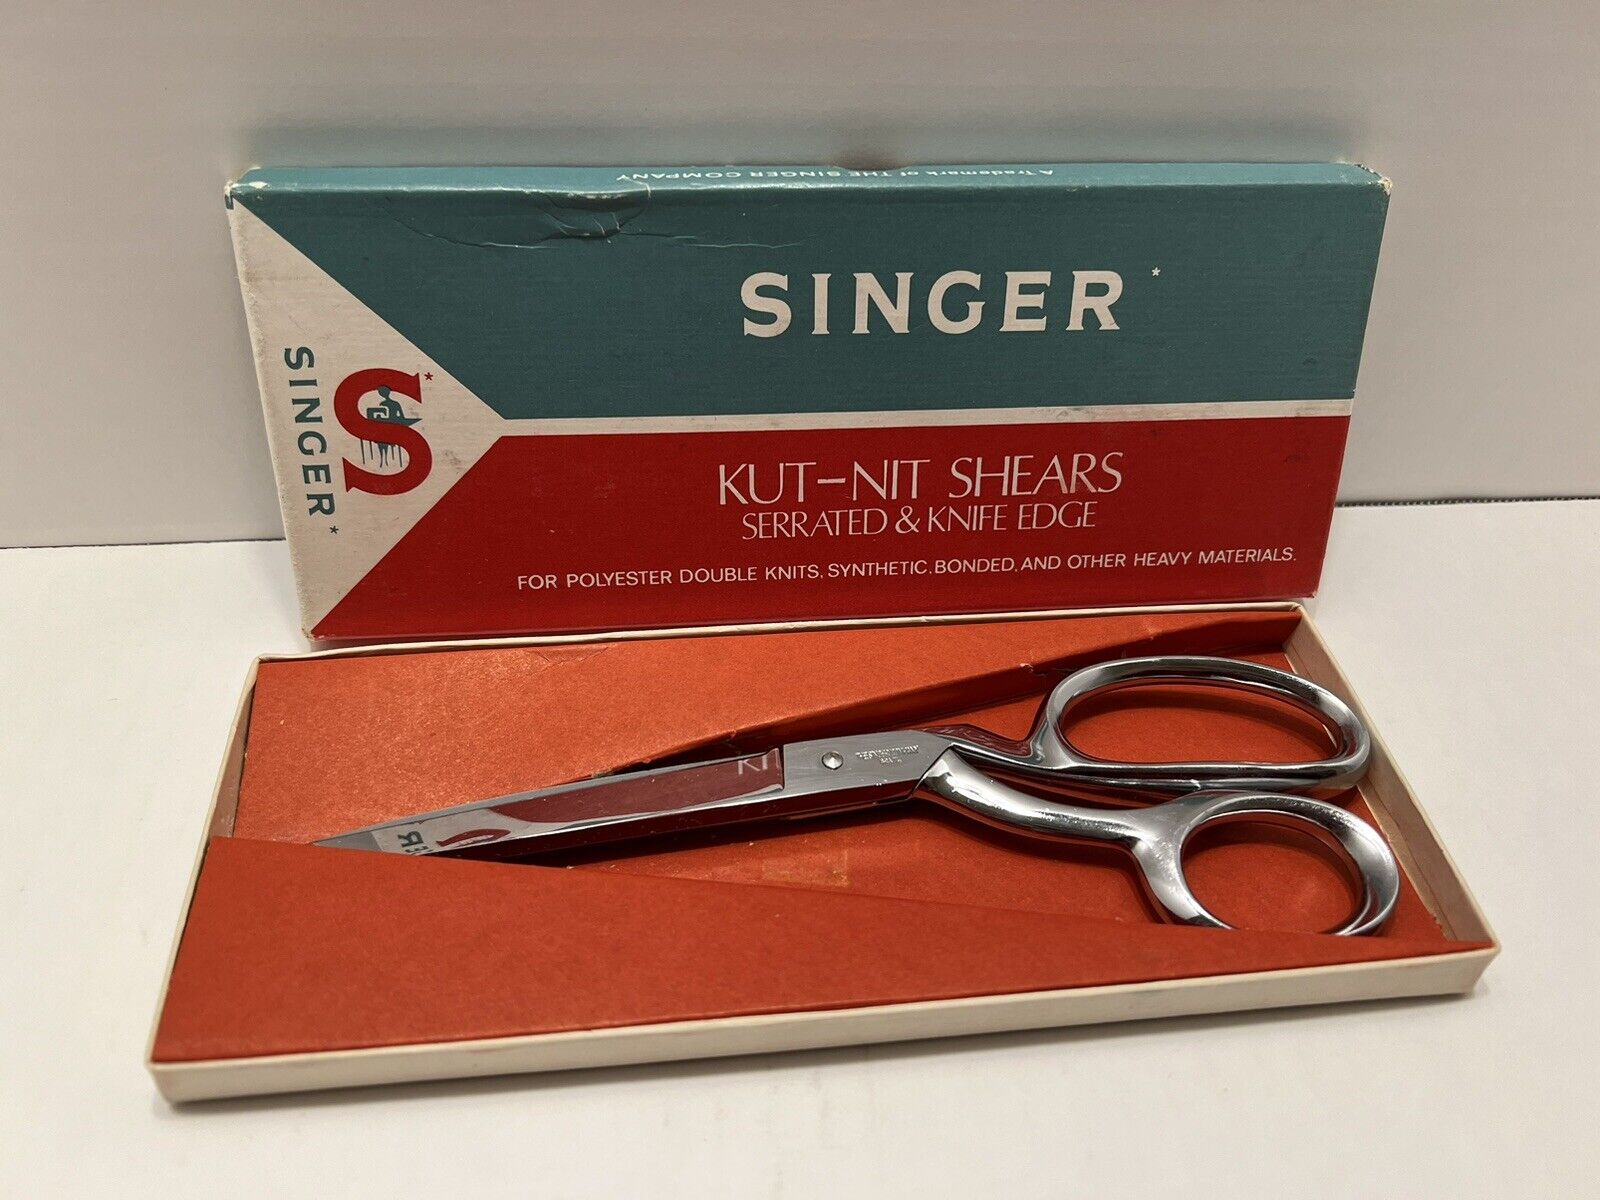 Vtg. SINGER Sewing Scissors Kut-Nit Shears Serrated & Knife Edge C808 W/Box